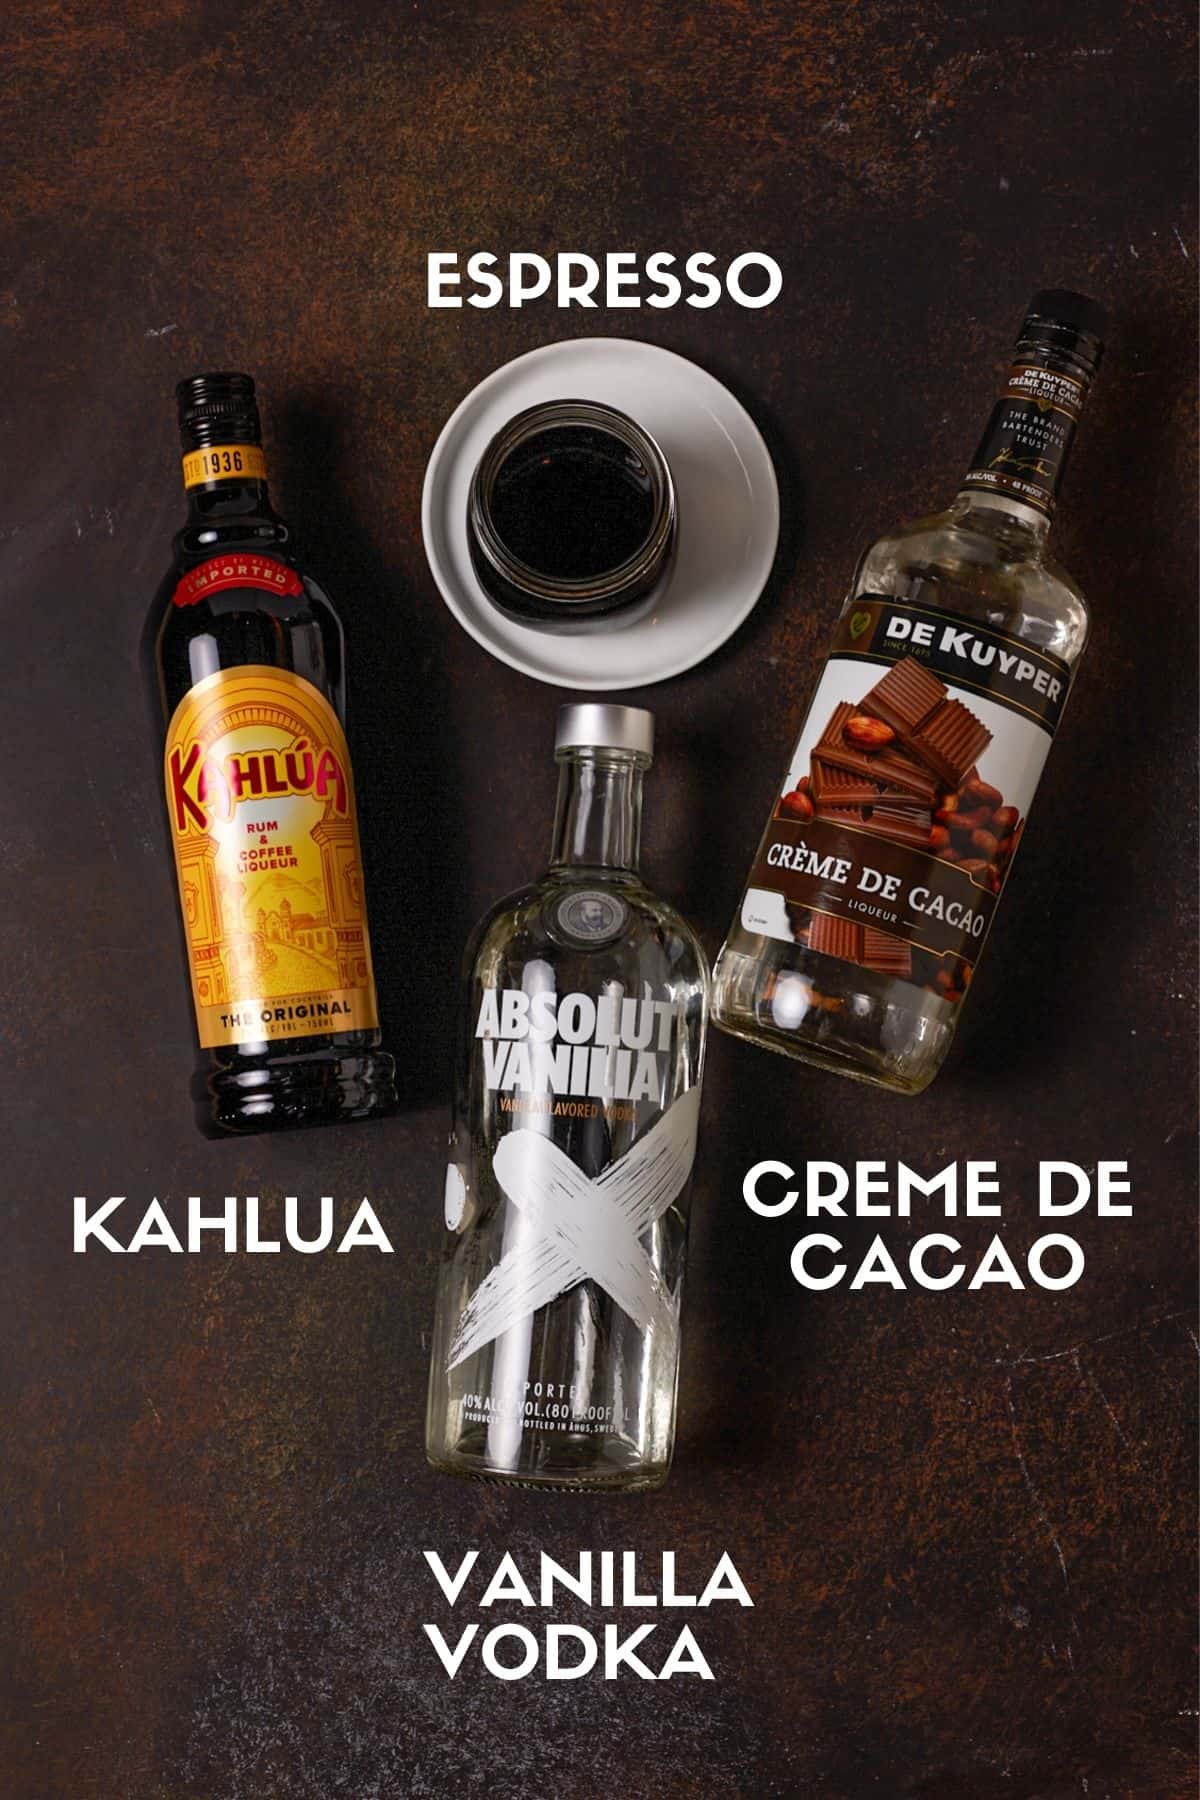 ingredients needed for kahlua espresso martini.